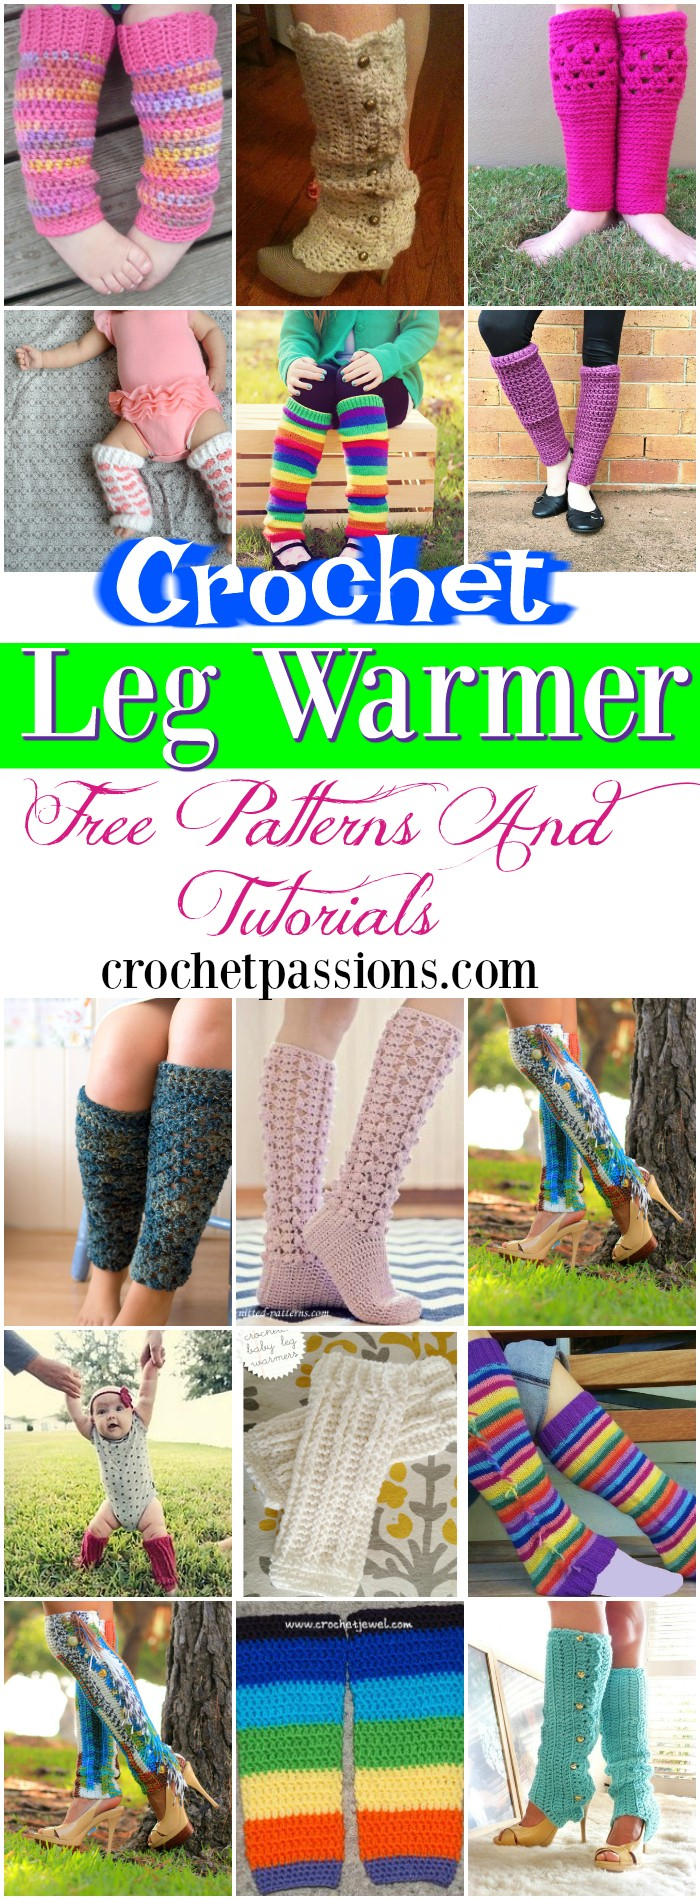 Free Crochet Leg Warmer Patterns Crochet Leg Warmer Free Patterns And Tutorials Crochet Passions